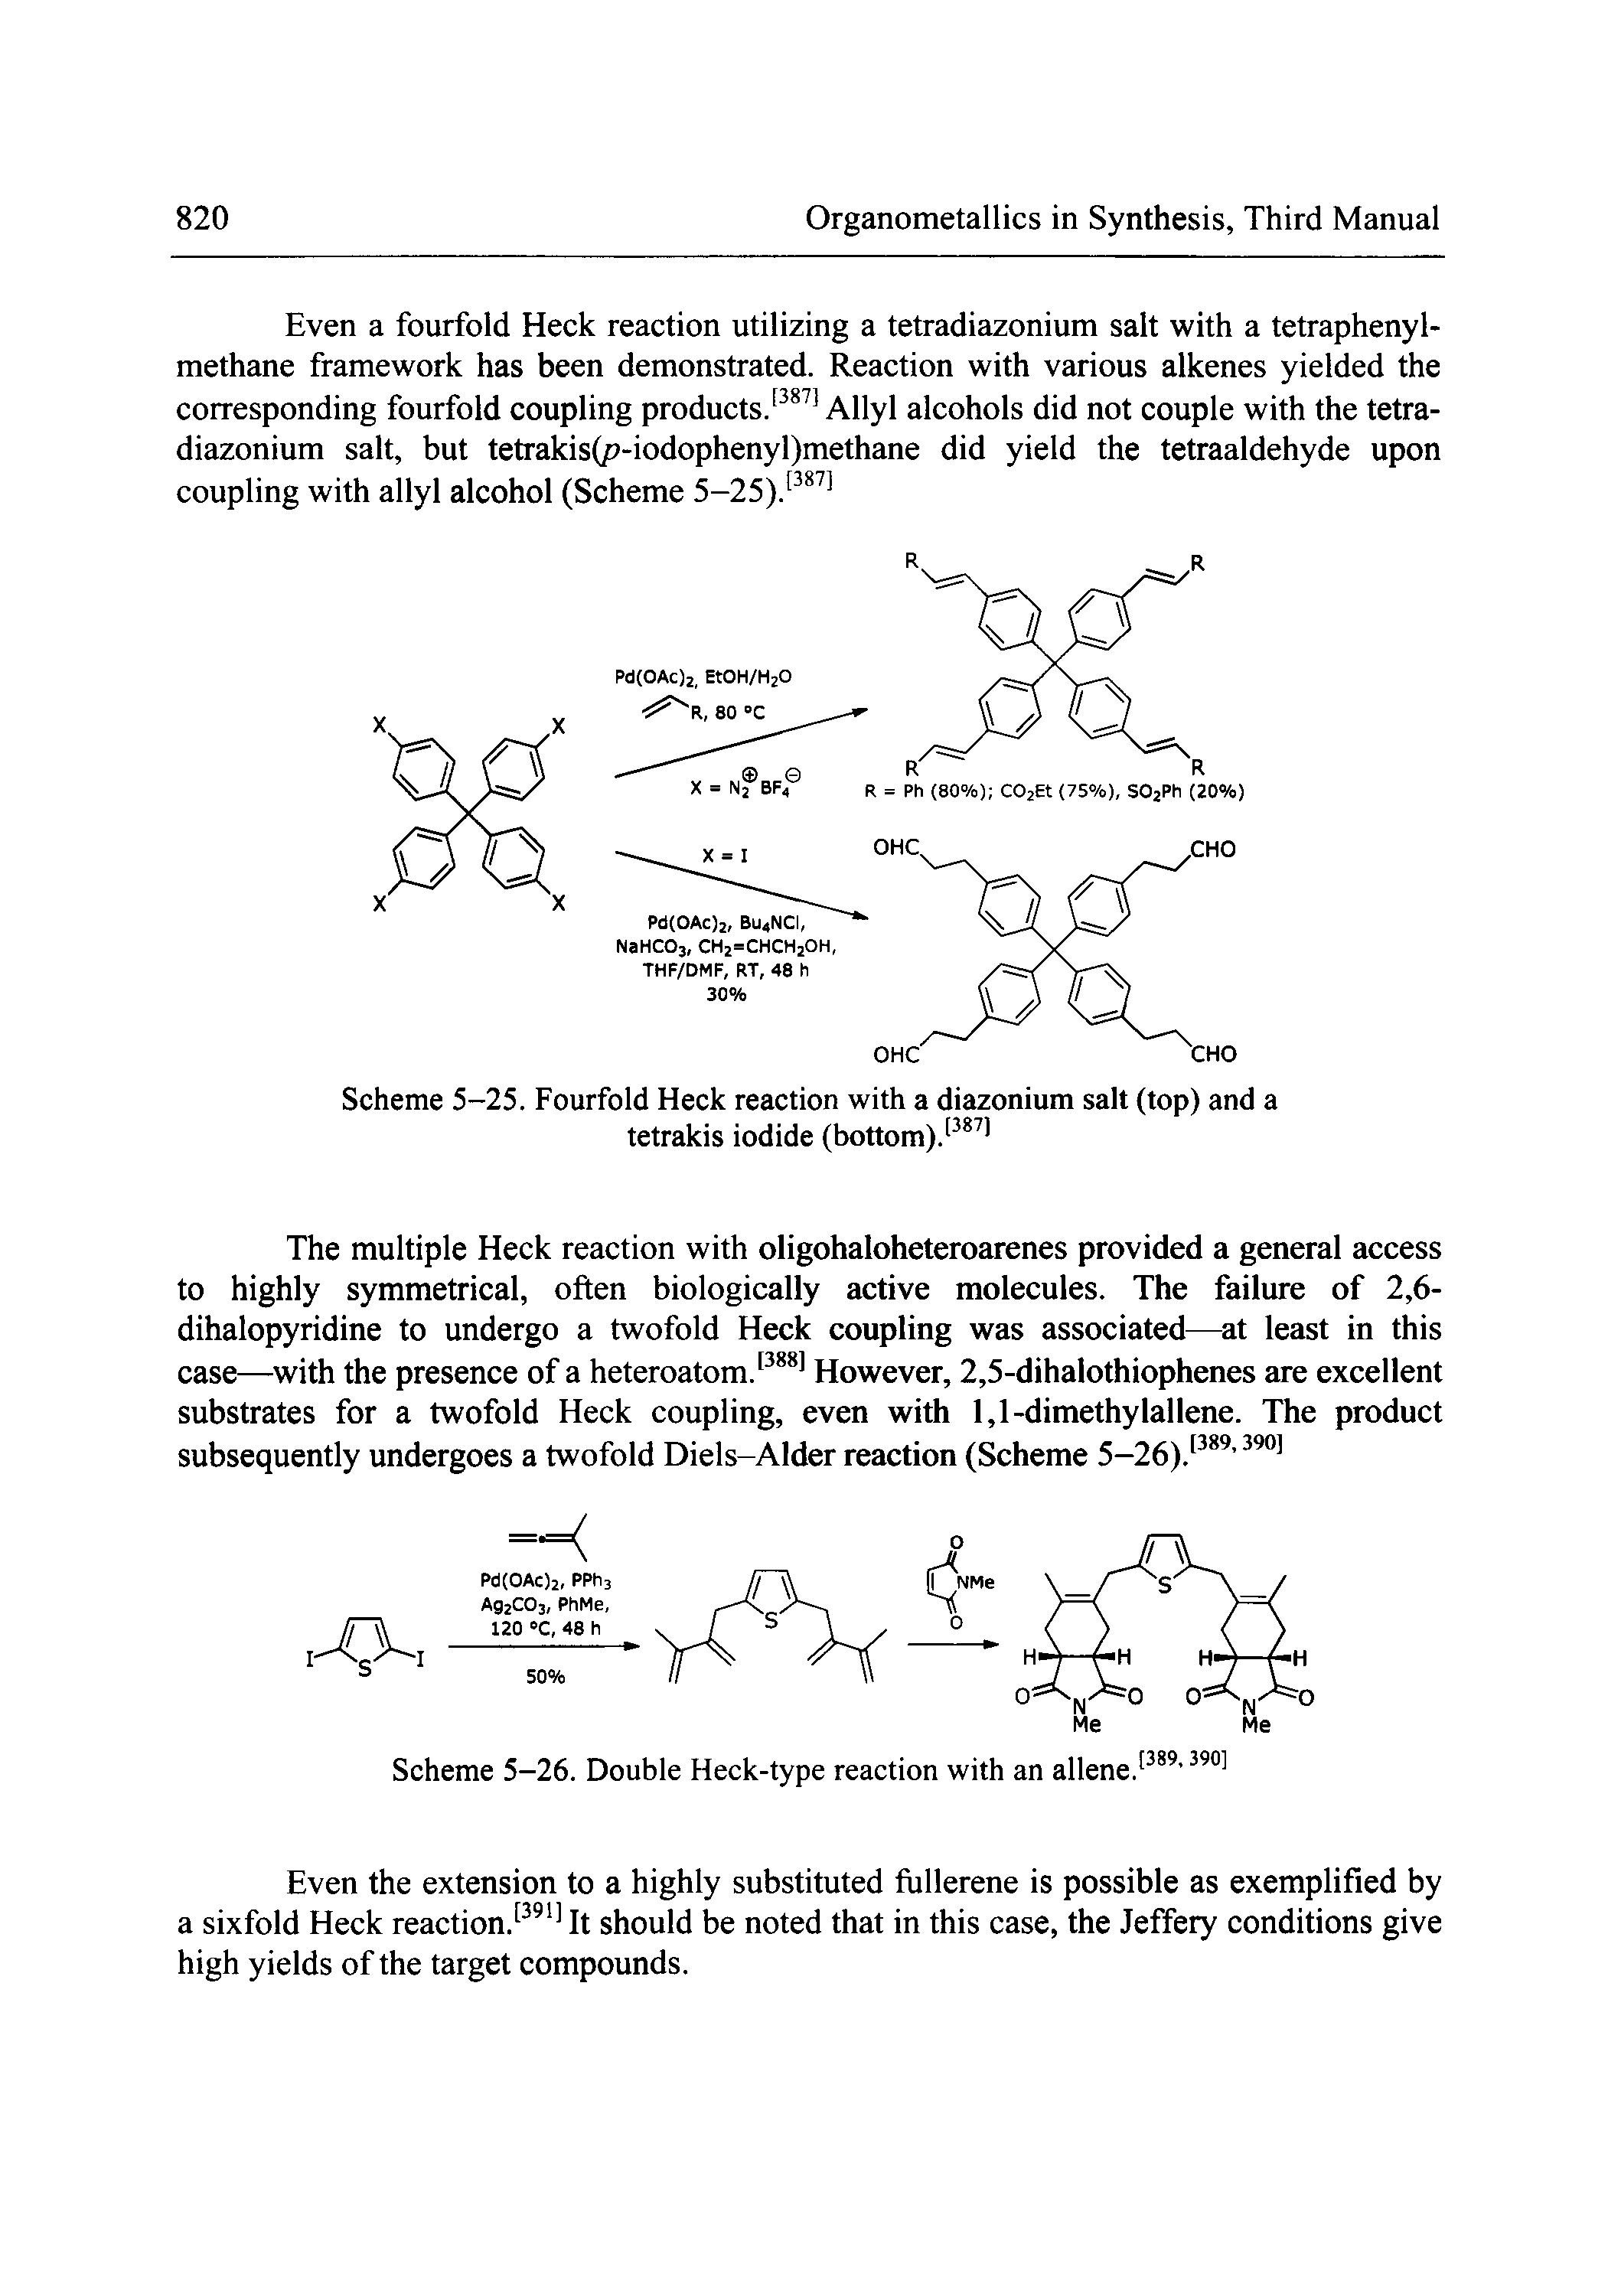 Scheme 5-25. Fourfold Heck reaction with a diazonium salt (top) and a tetrakis iodide (bottom). ...